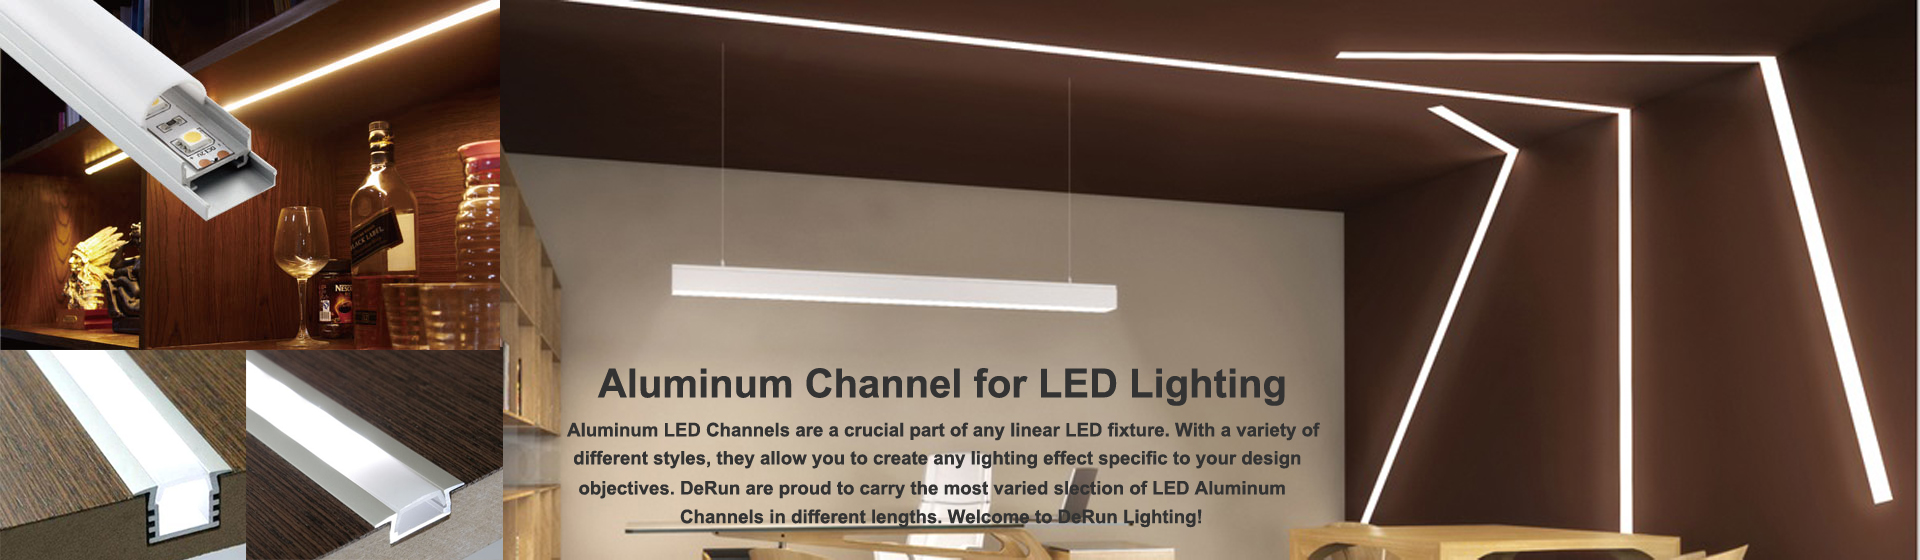 canal led de aluminio - Luces LED lineales